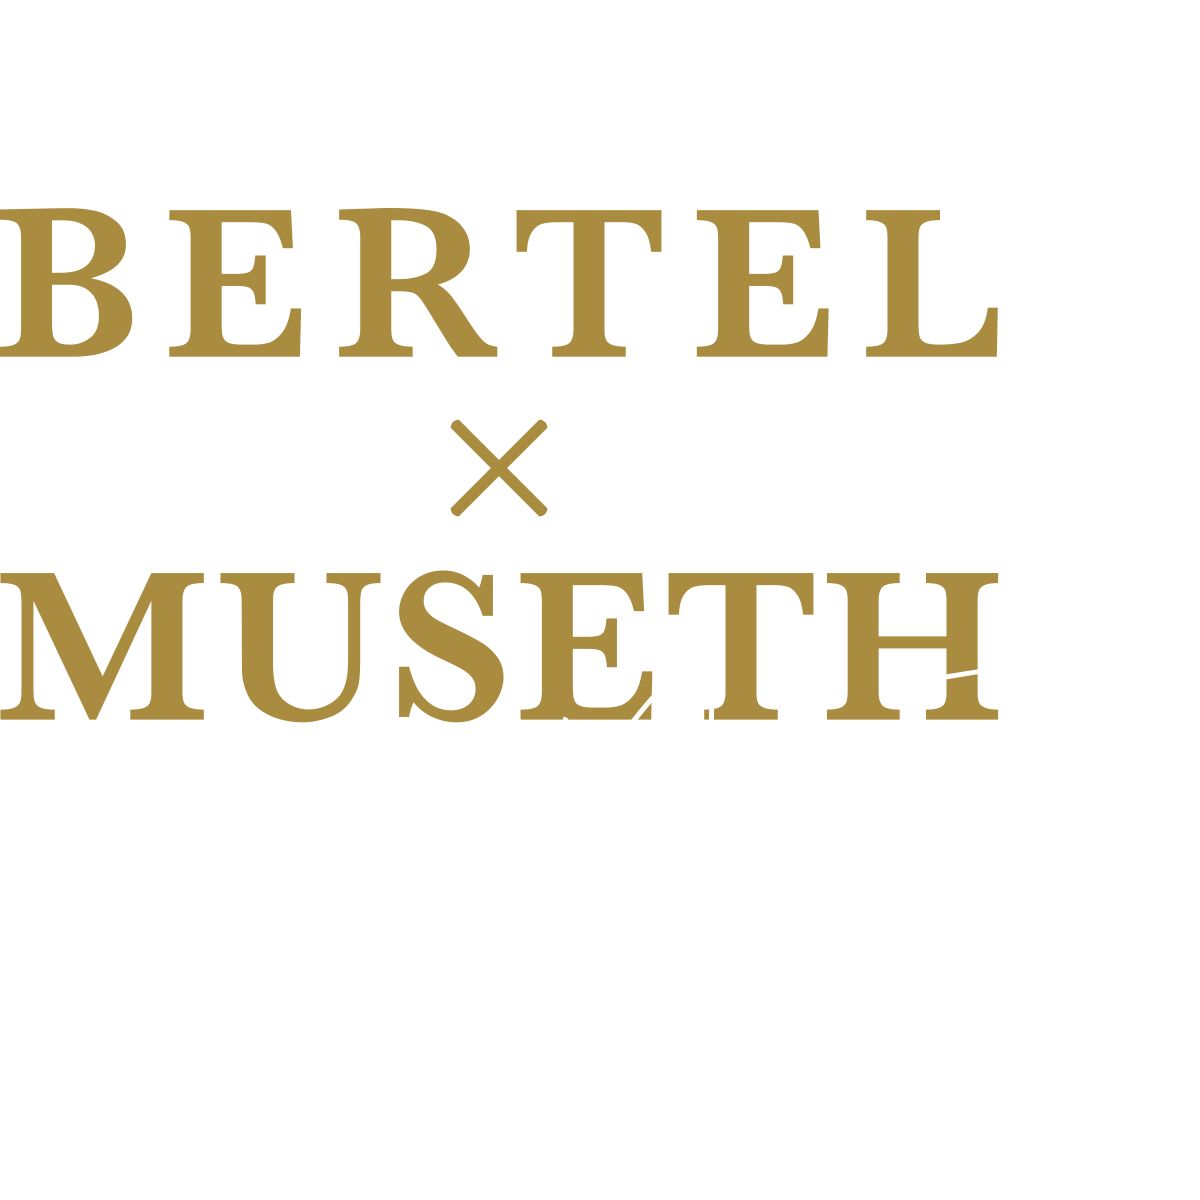 Bertel x Museth